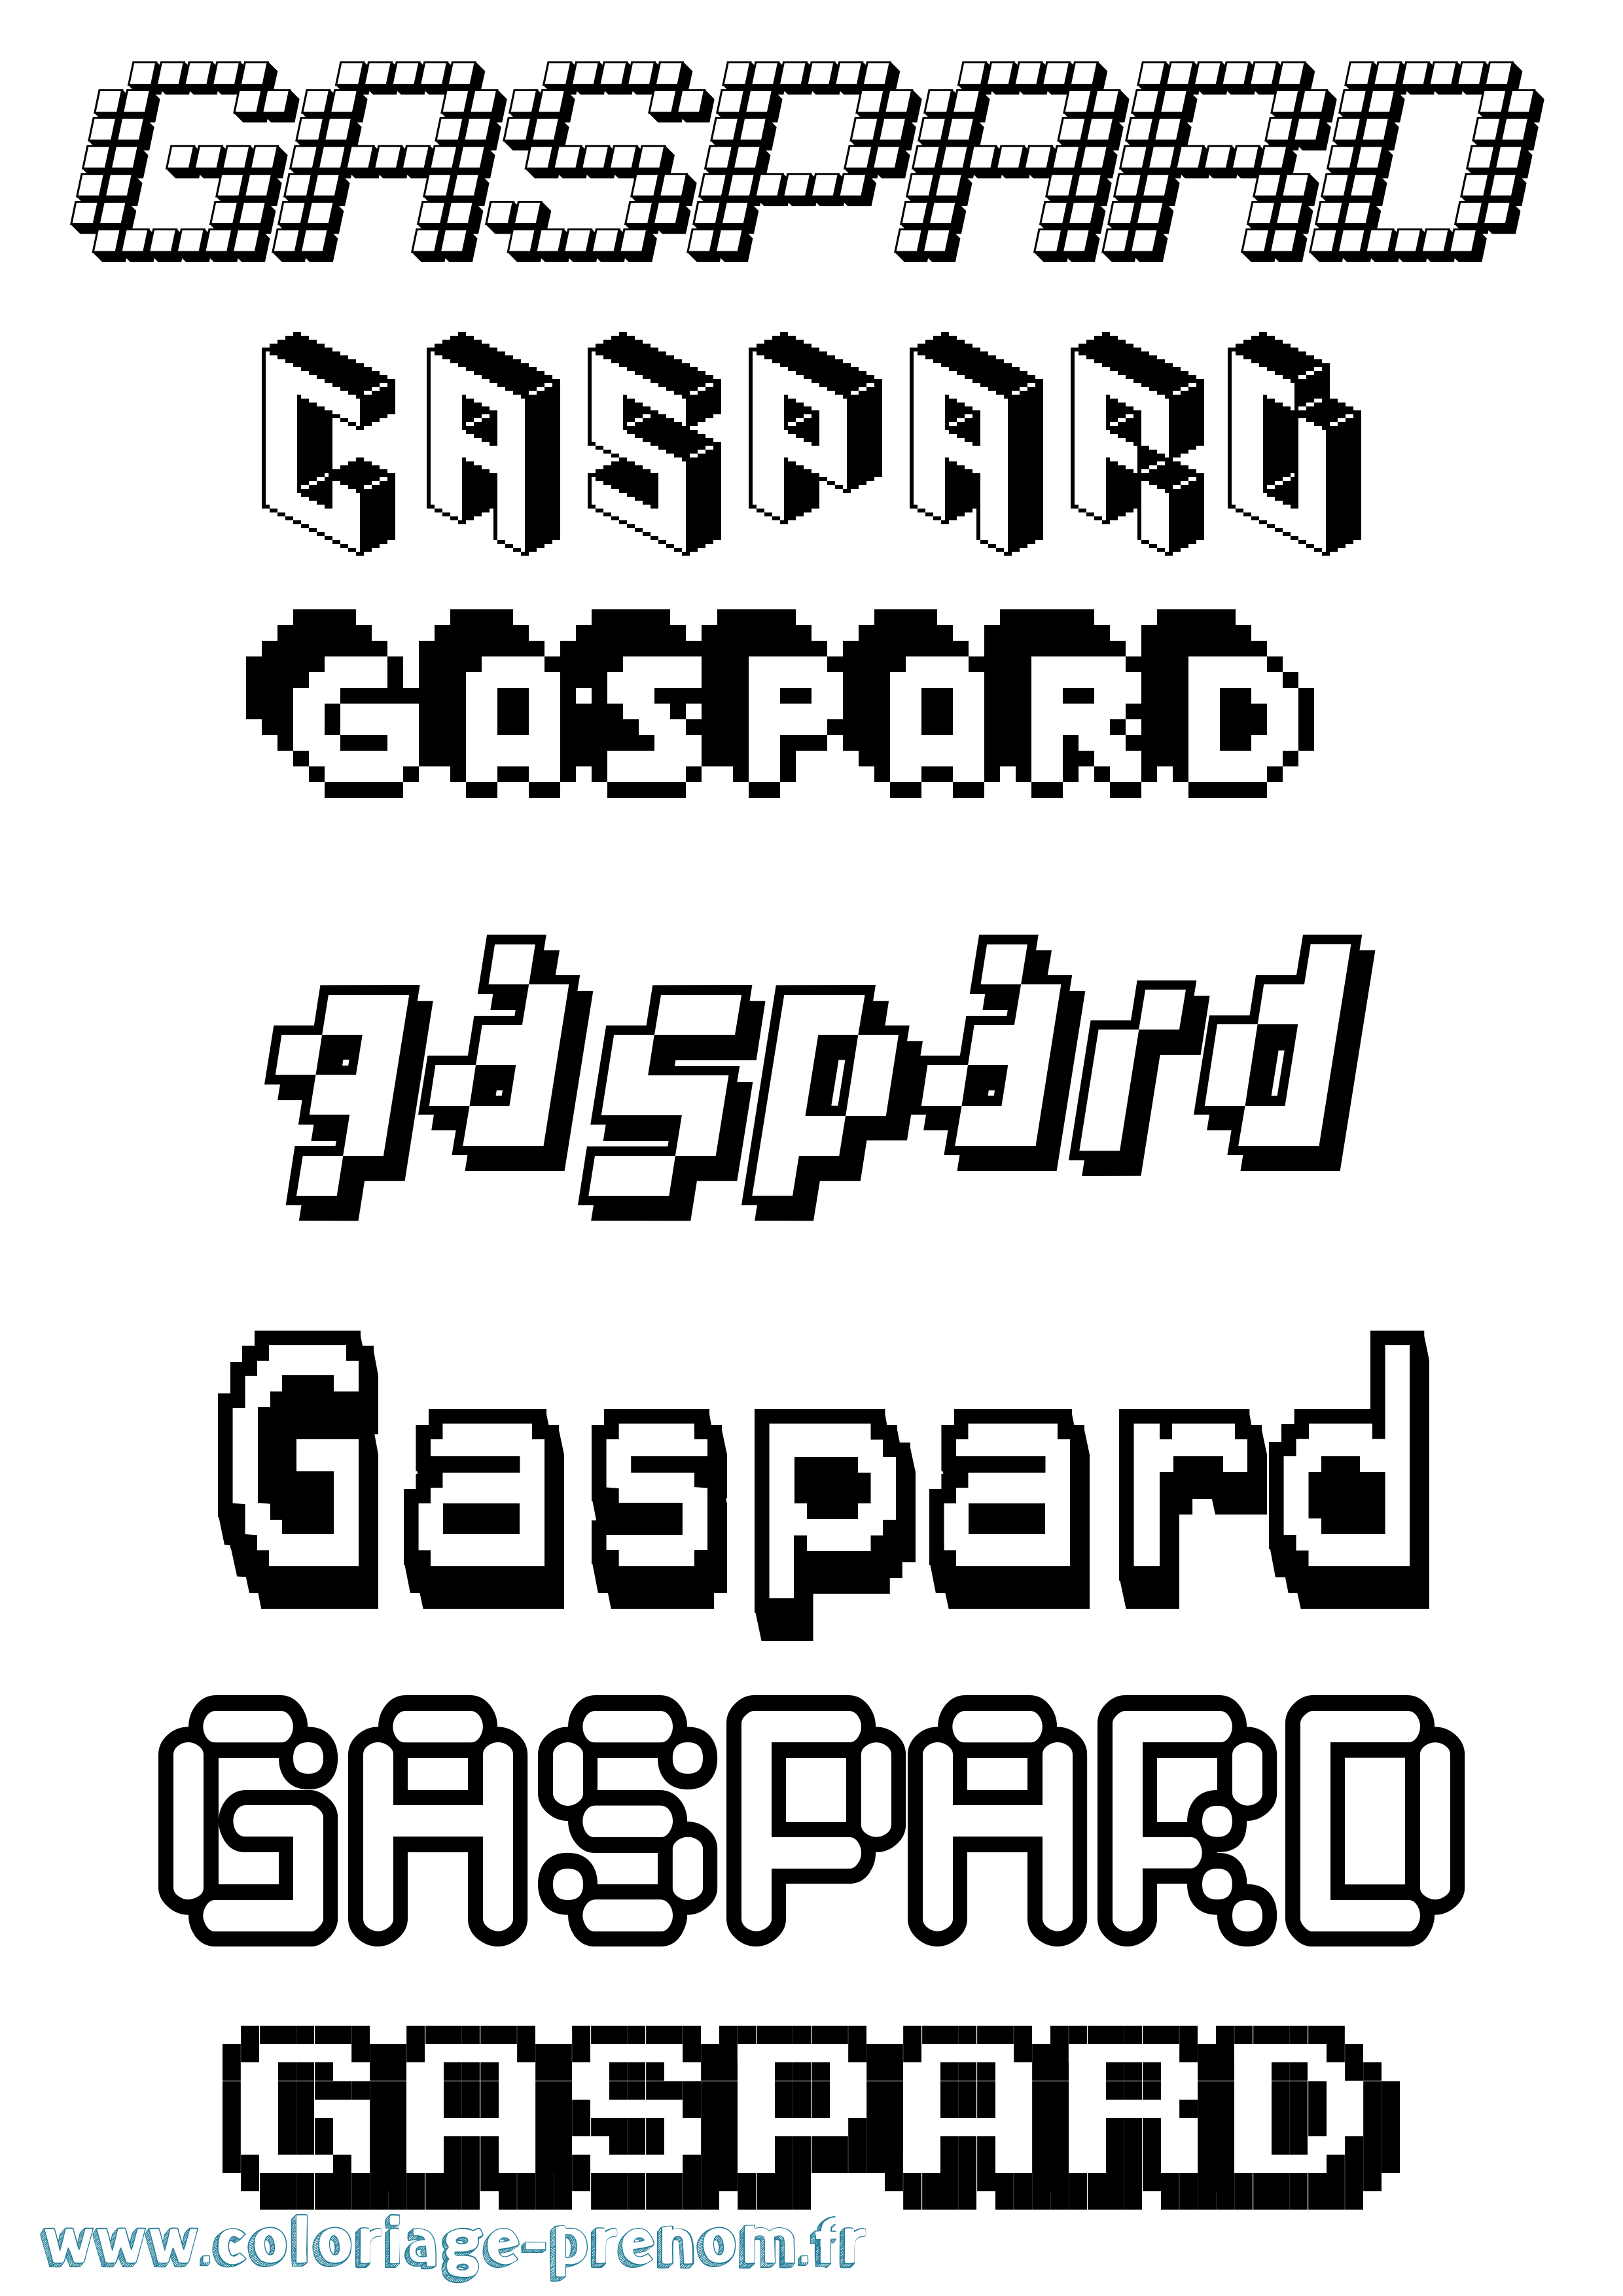 Coloriage prénom Gaspard Pixel